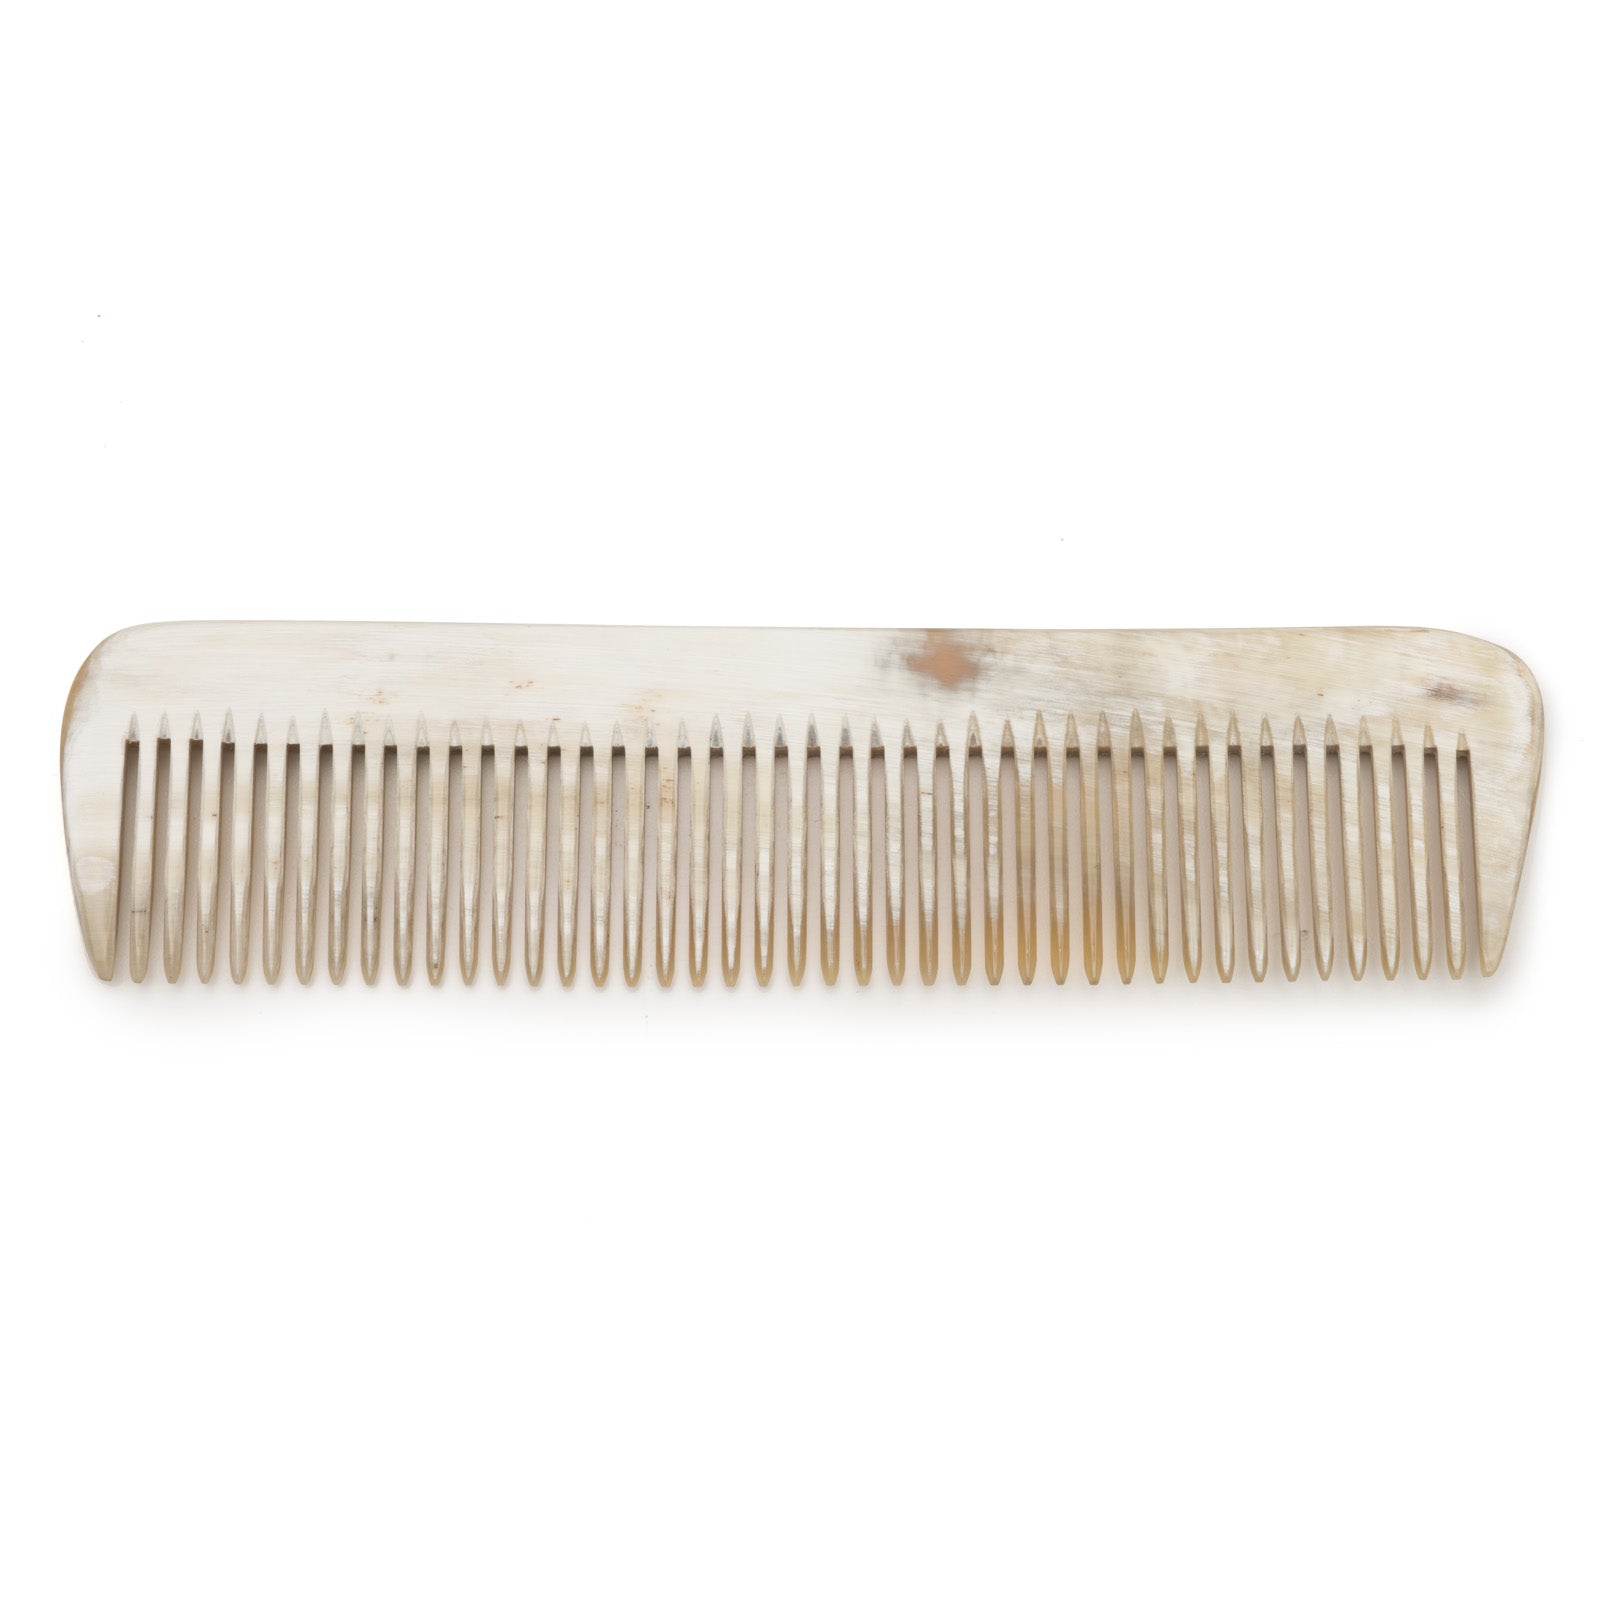 Shop Dresser Comb | Burke Decor